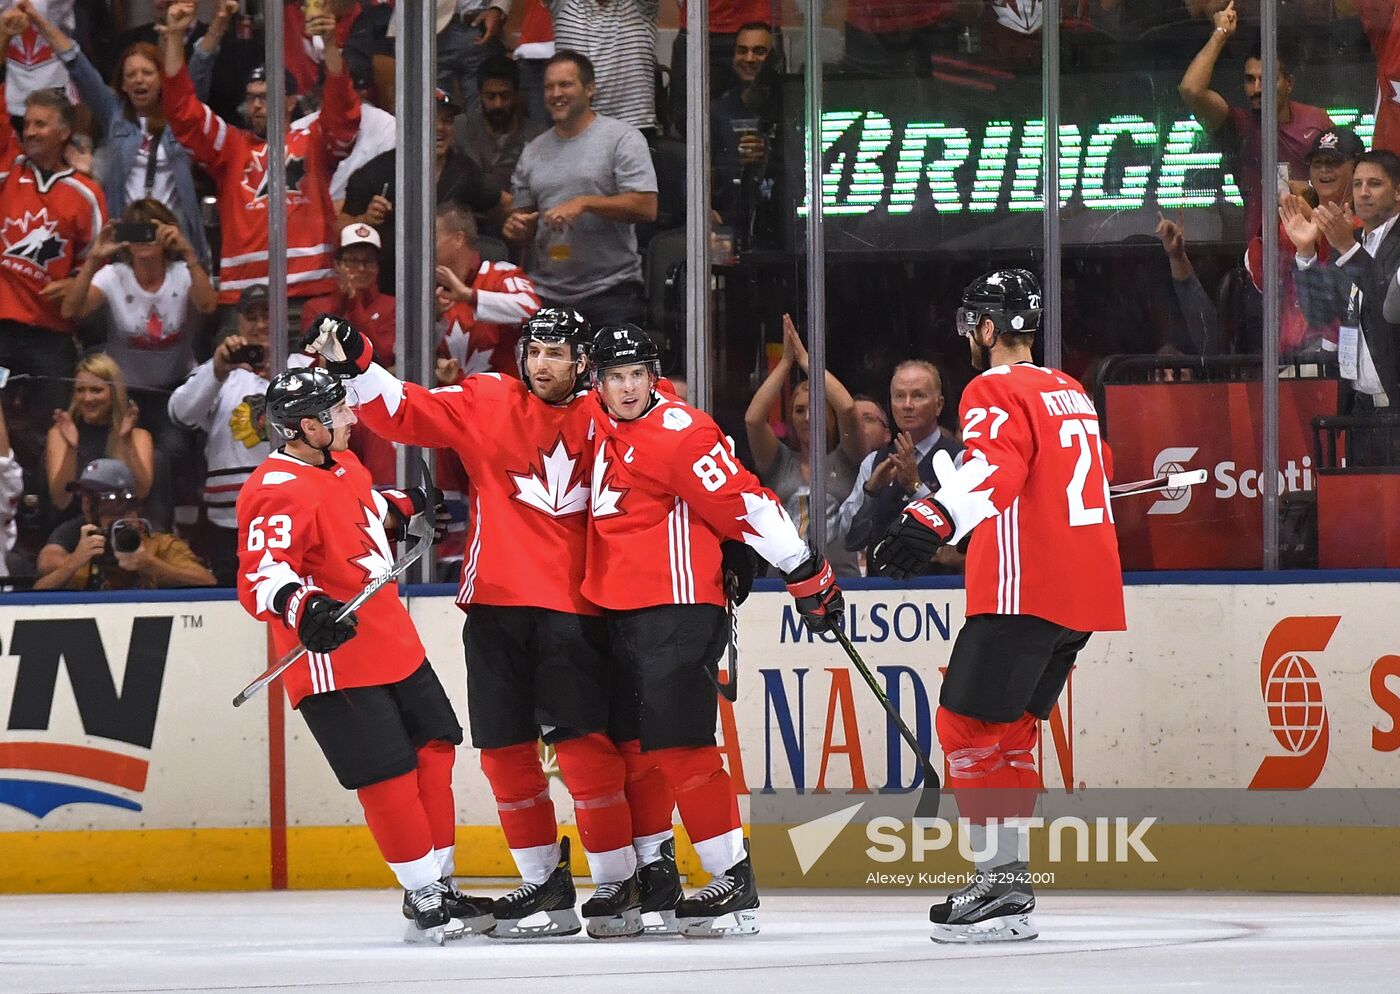 2016 World Cup of Hockey. Canada vs. Team Europe